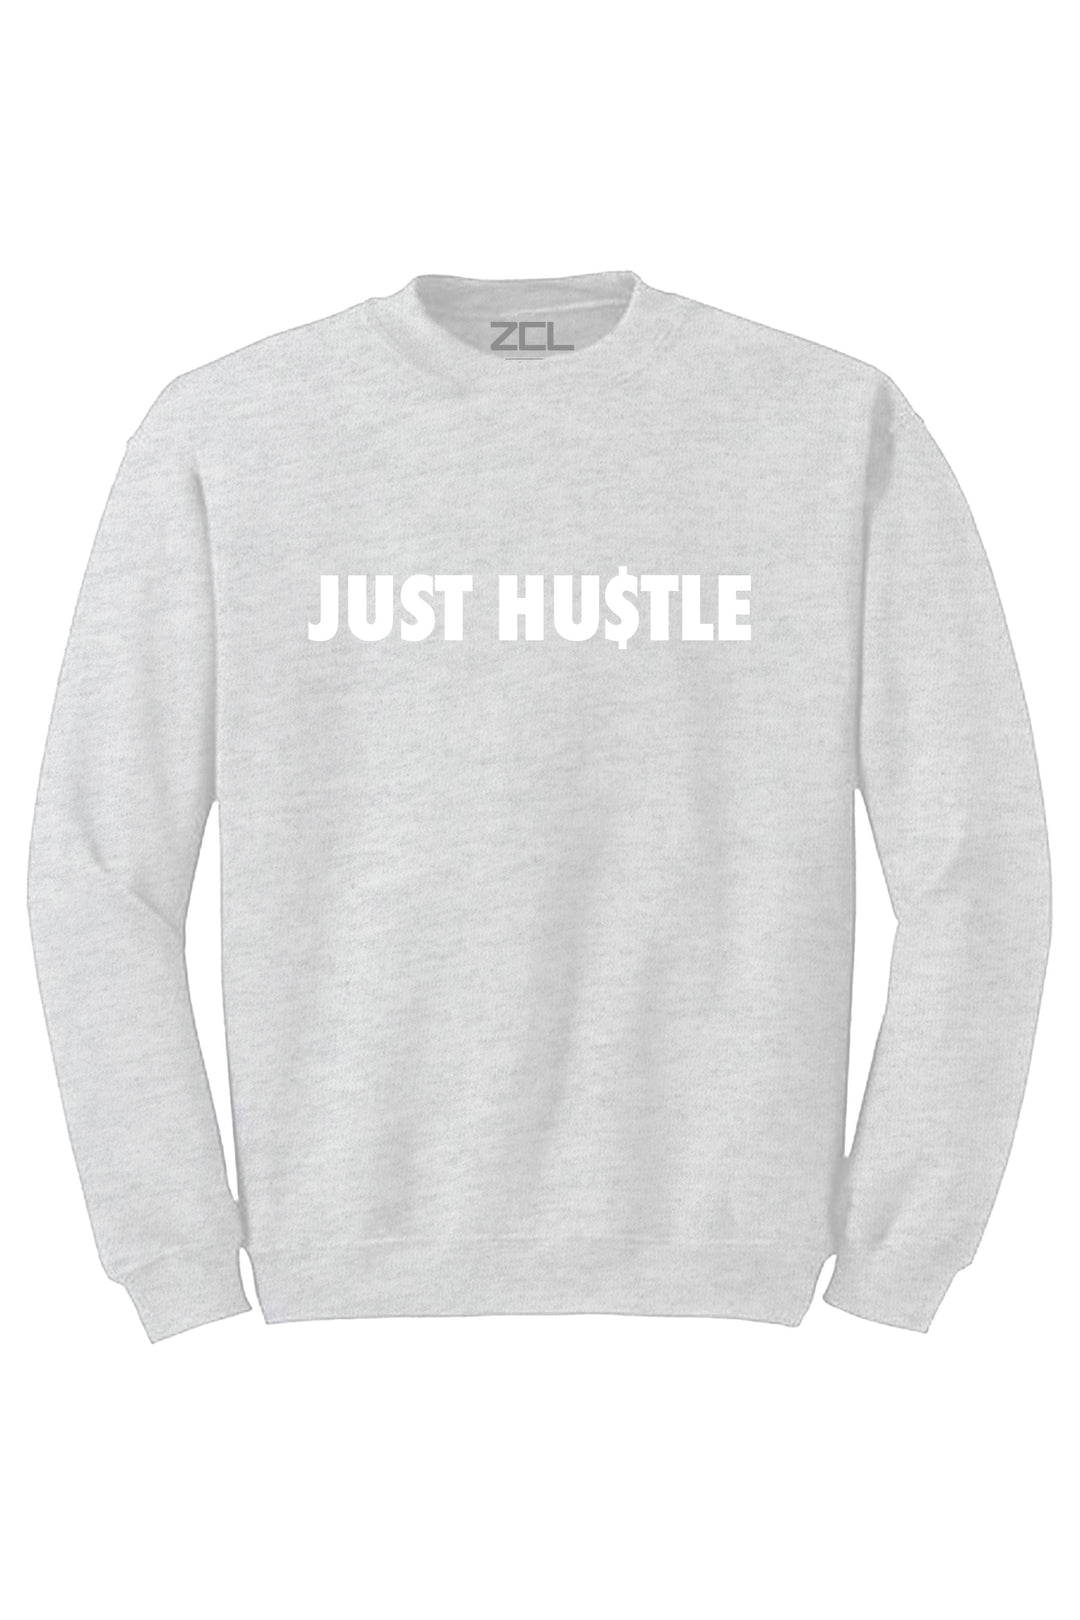 Just Hu$tle Crewneck Sweatshirt (White Logo) - Zamage